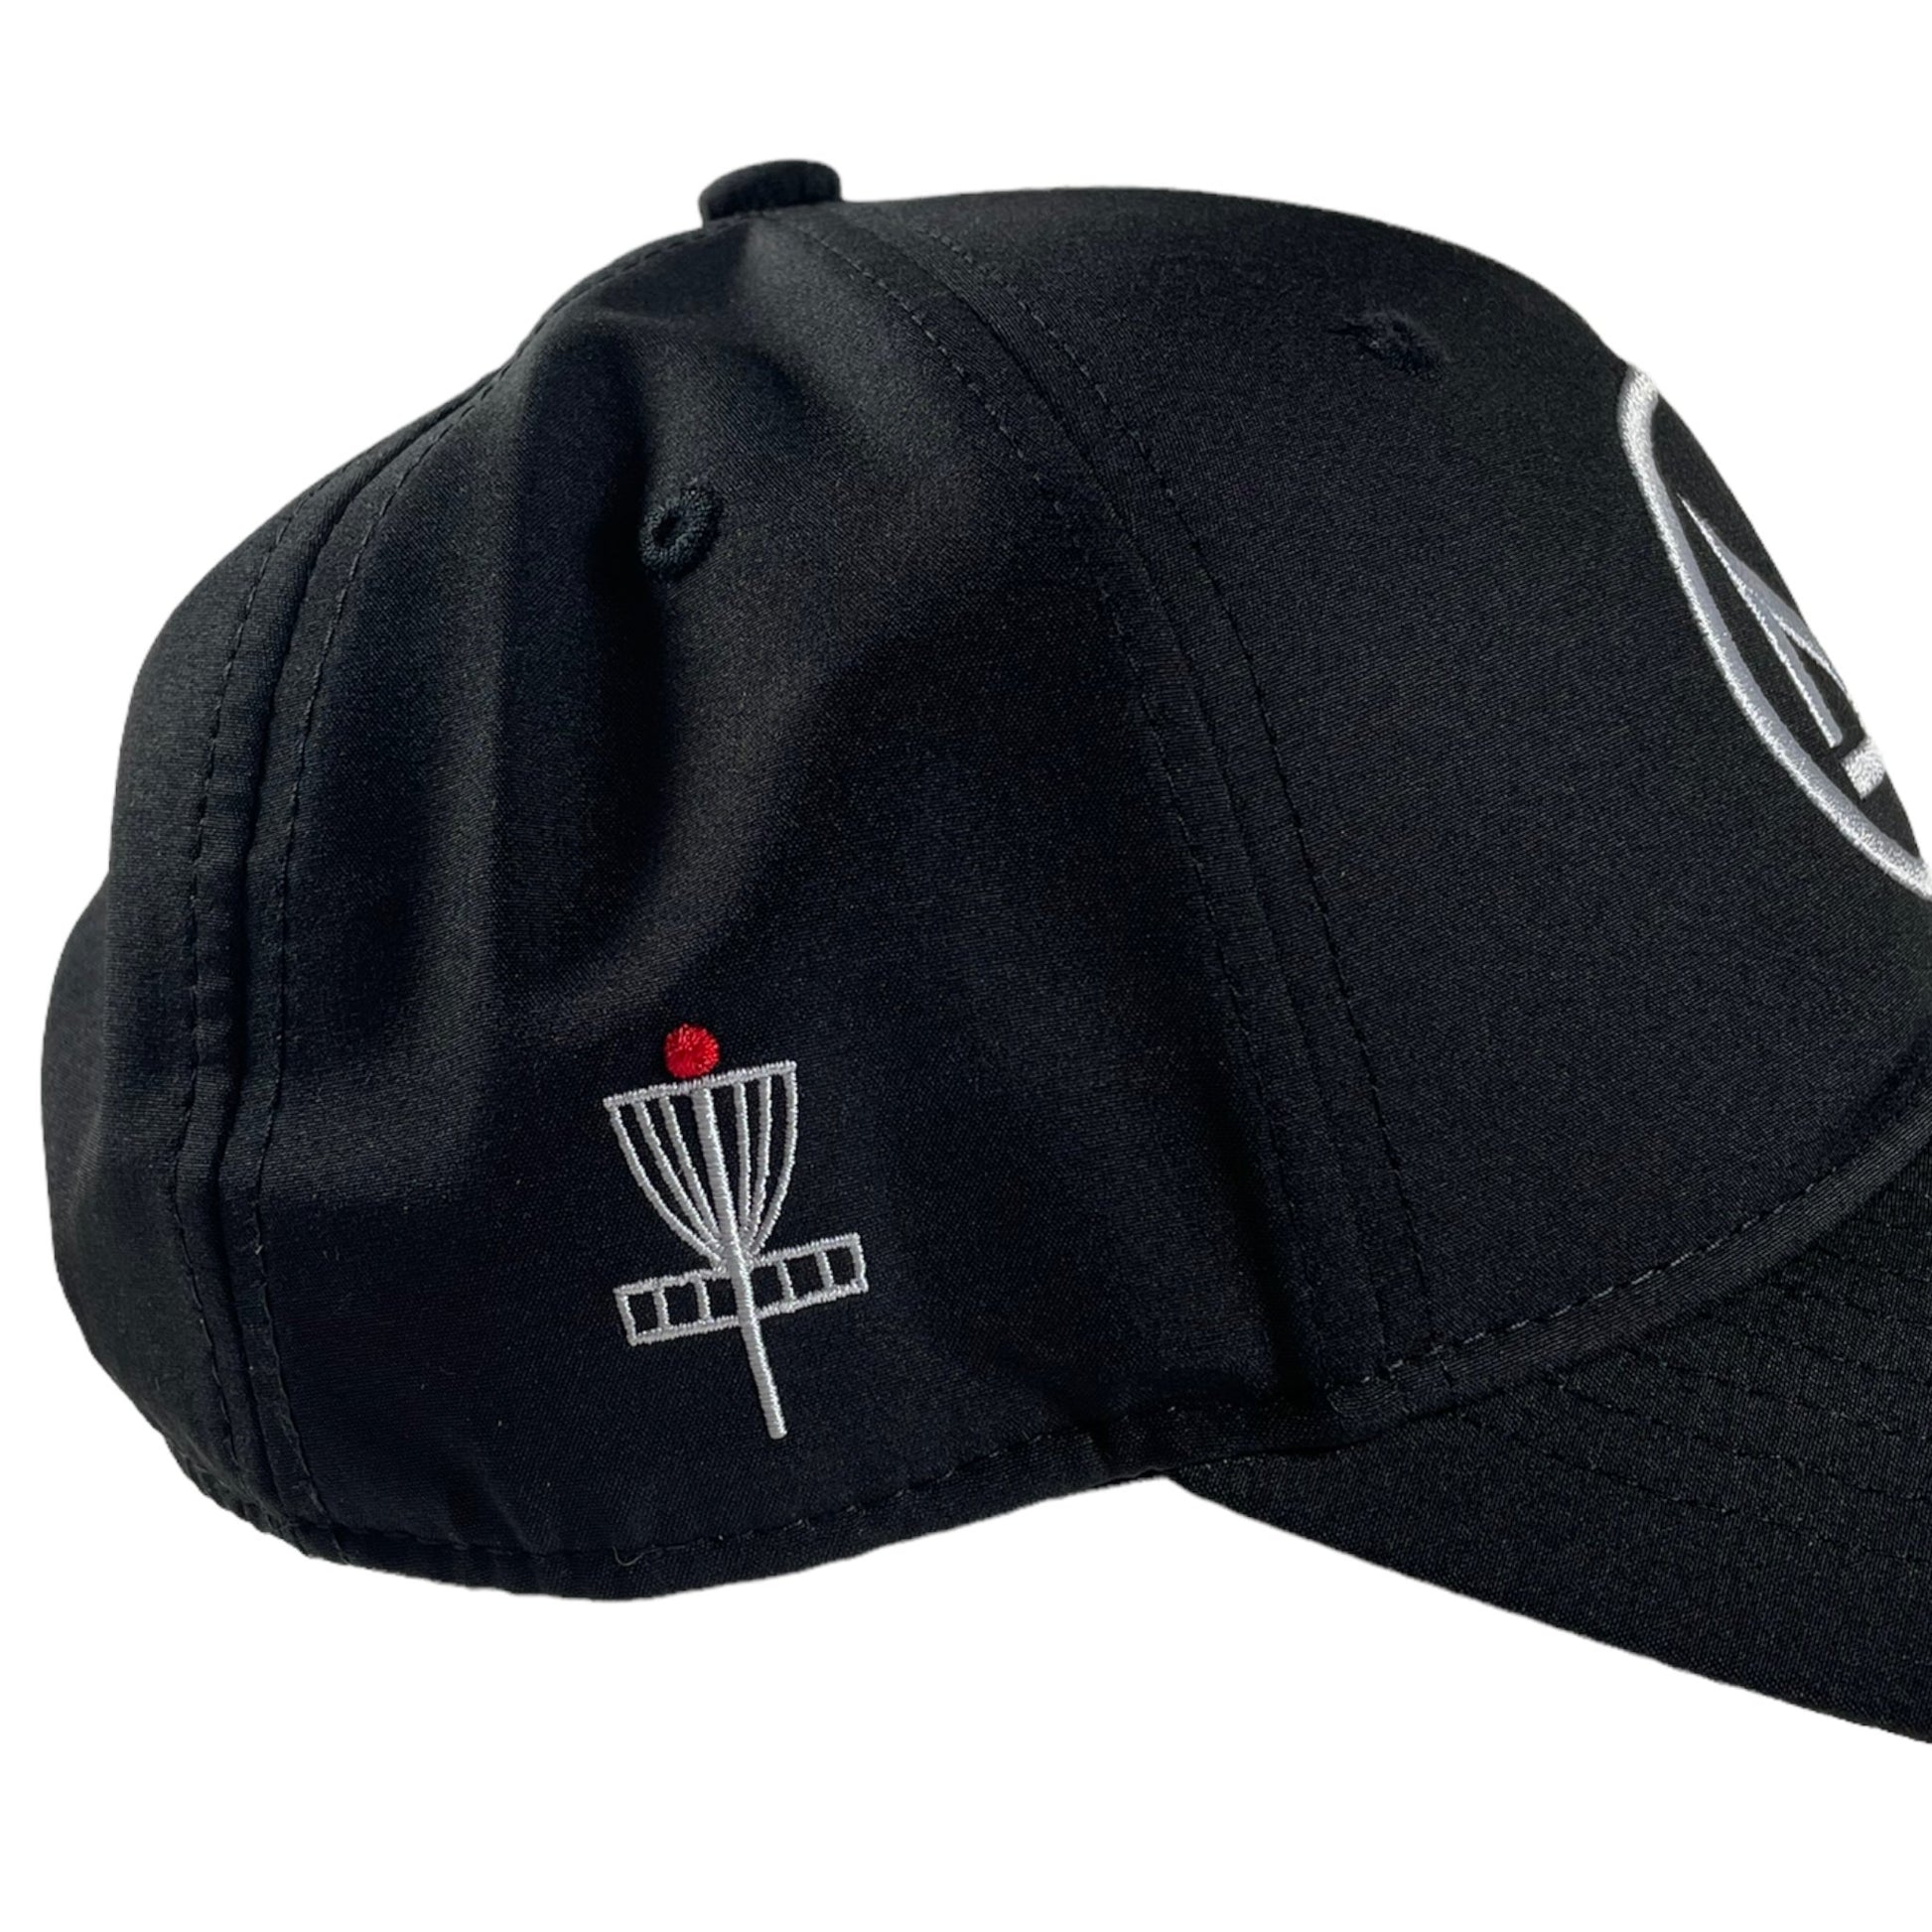 Perks and Re-creation Kat Mertsch Tour Series Pro Hat - Black Disc Golf